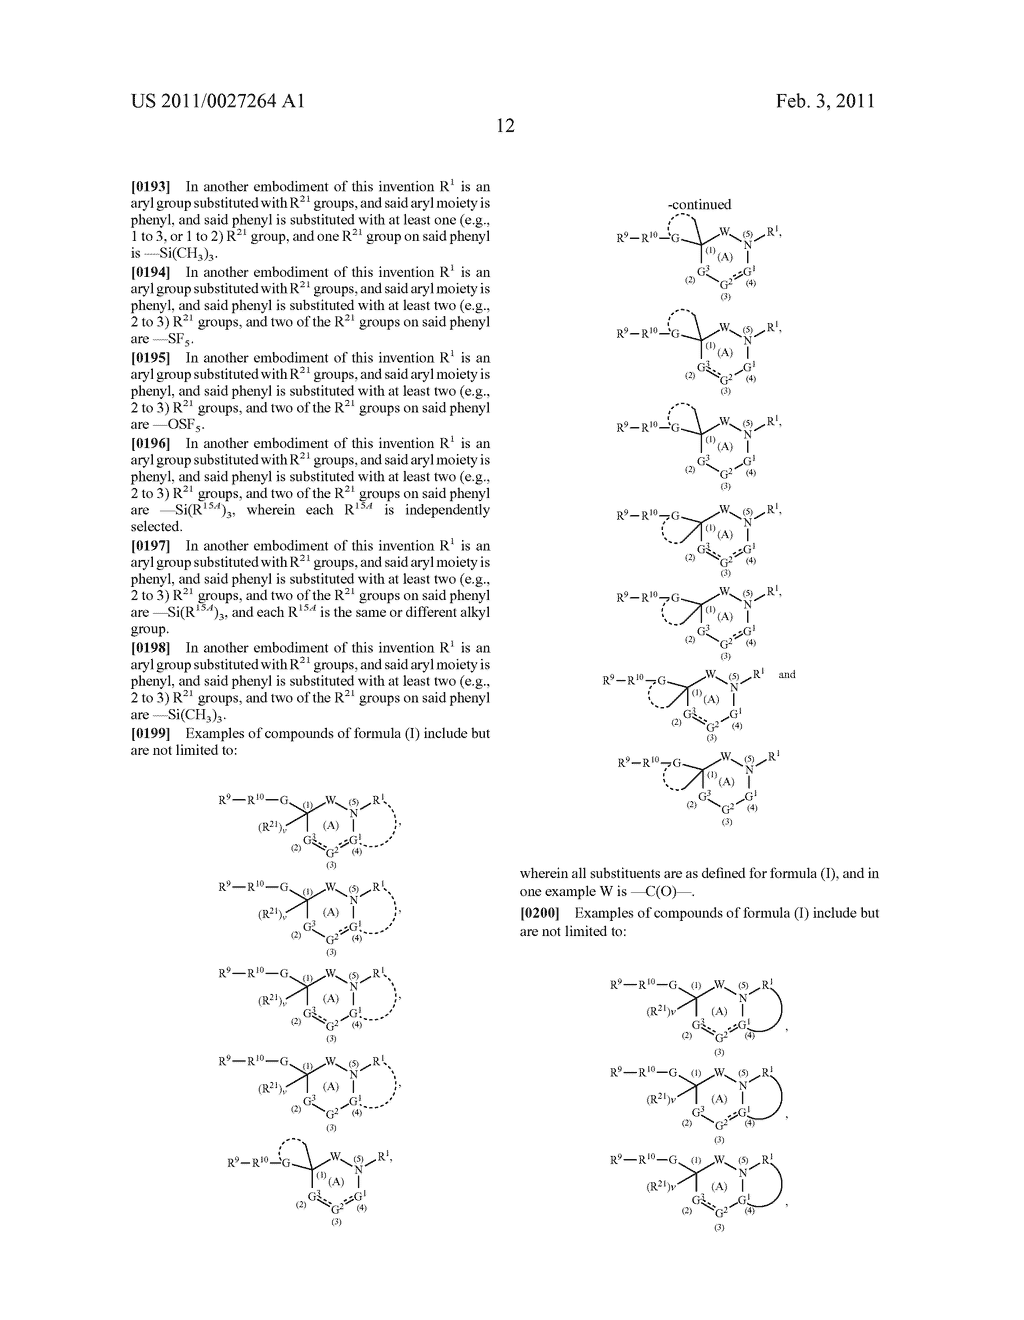 GAMMA SECRETASE MODULATORS FOR THE TREATMENT OF ALZHEIMER'S DISEASE - diagram, schematic, and image 13